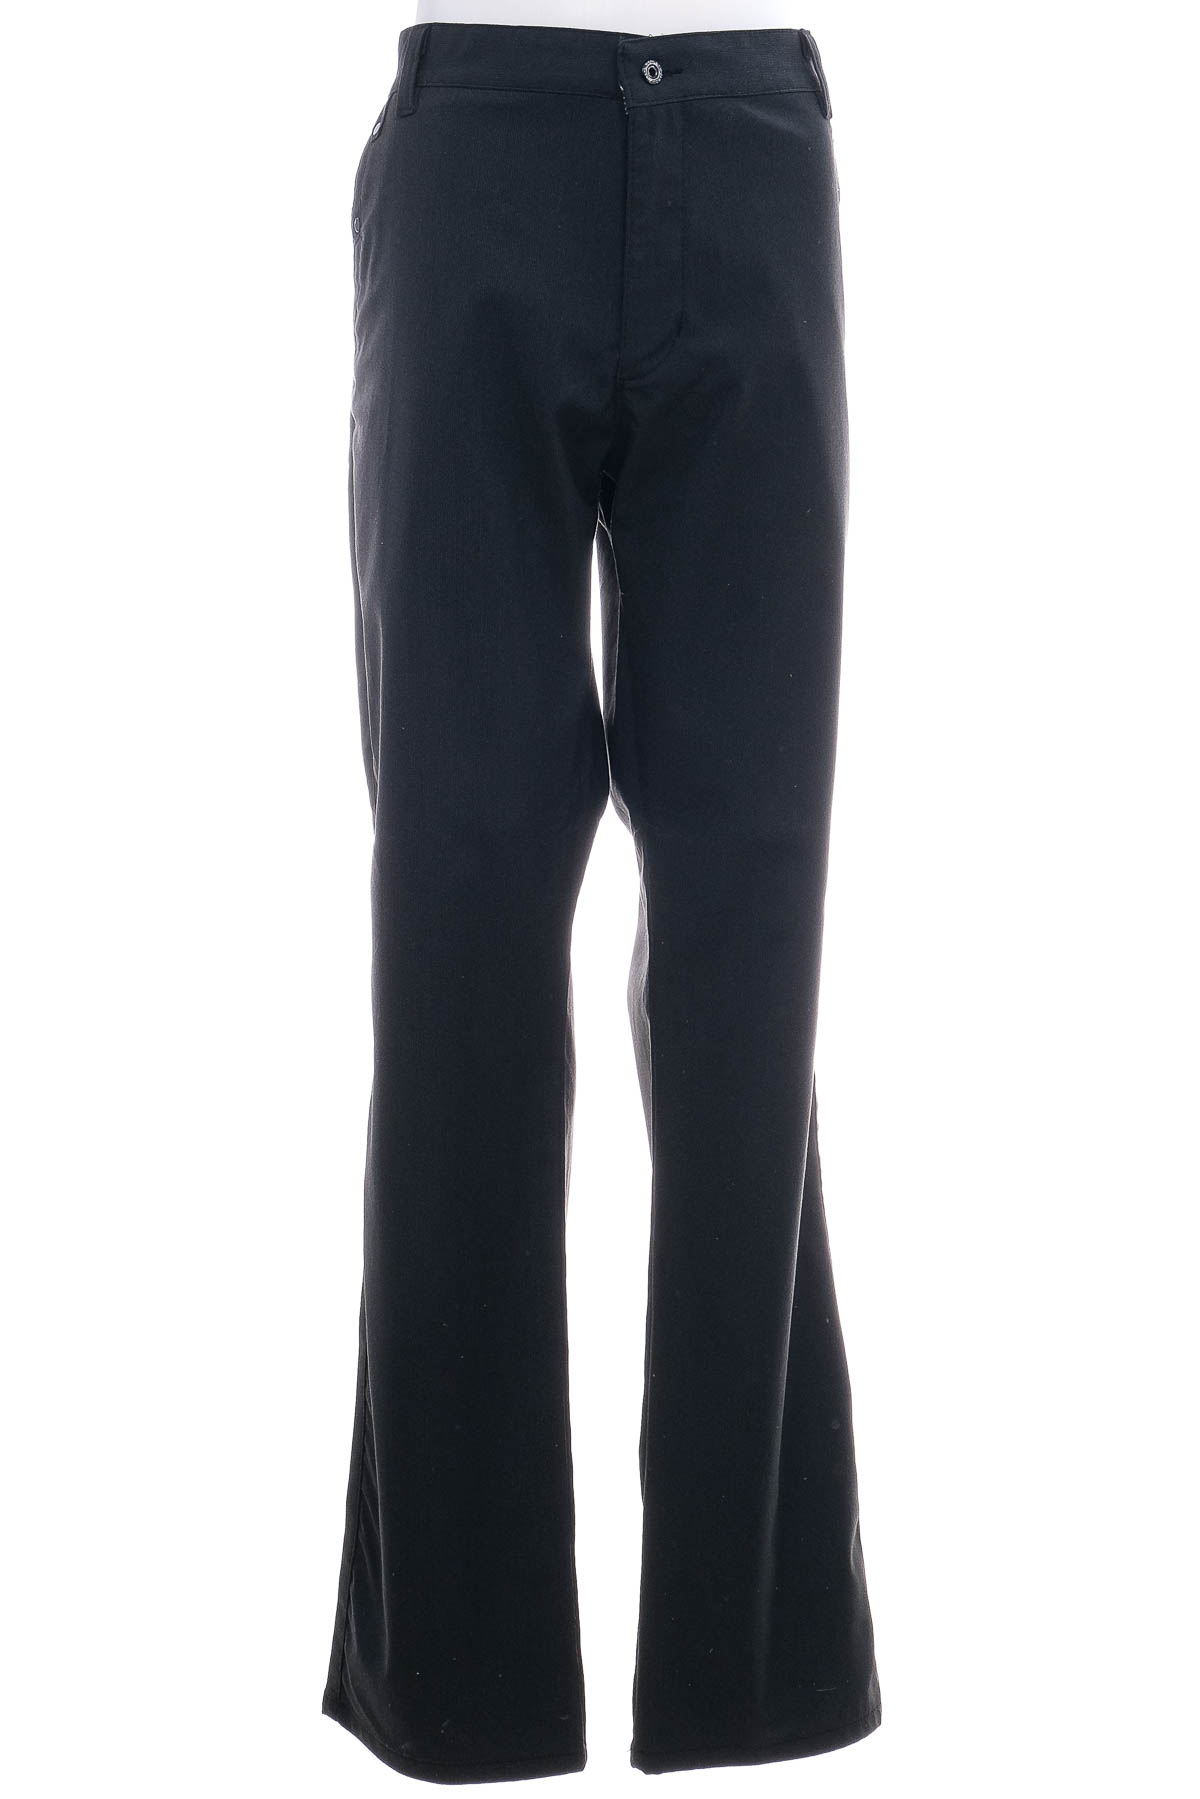 Men's trousers - New Jarsin - 0